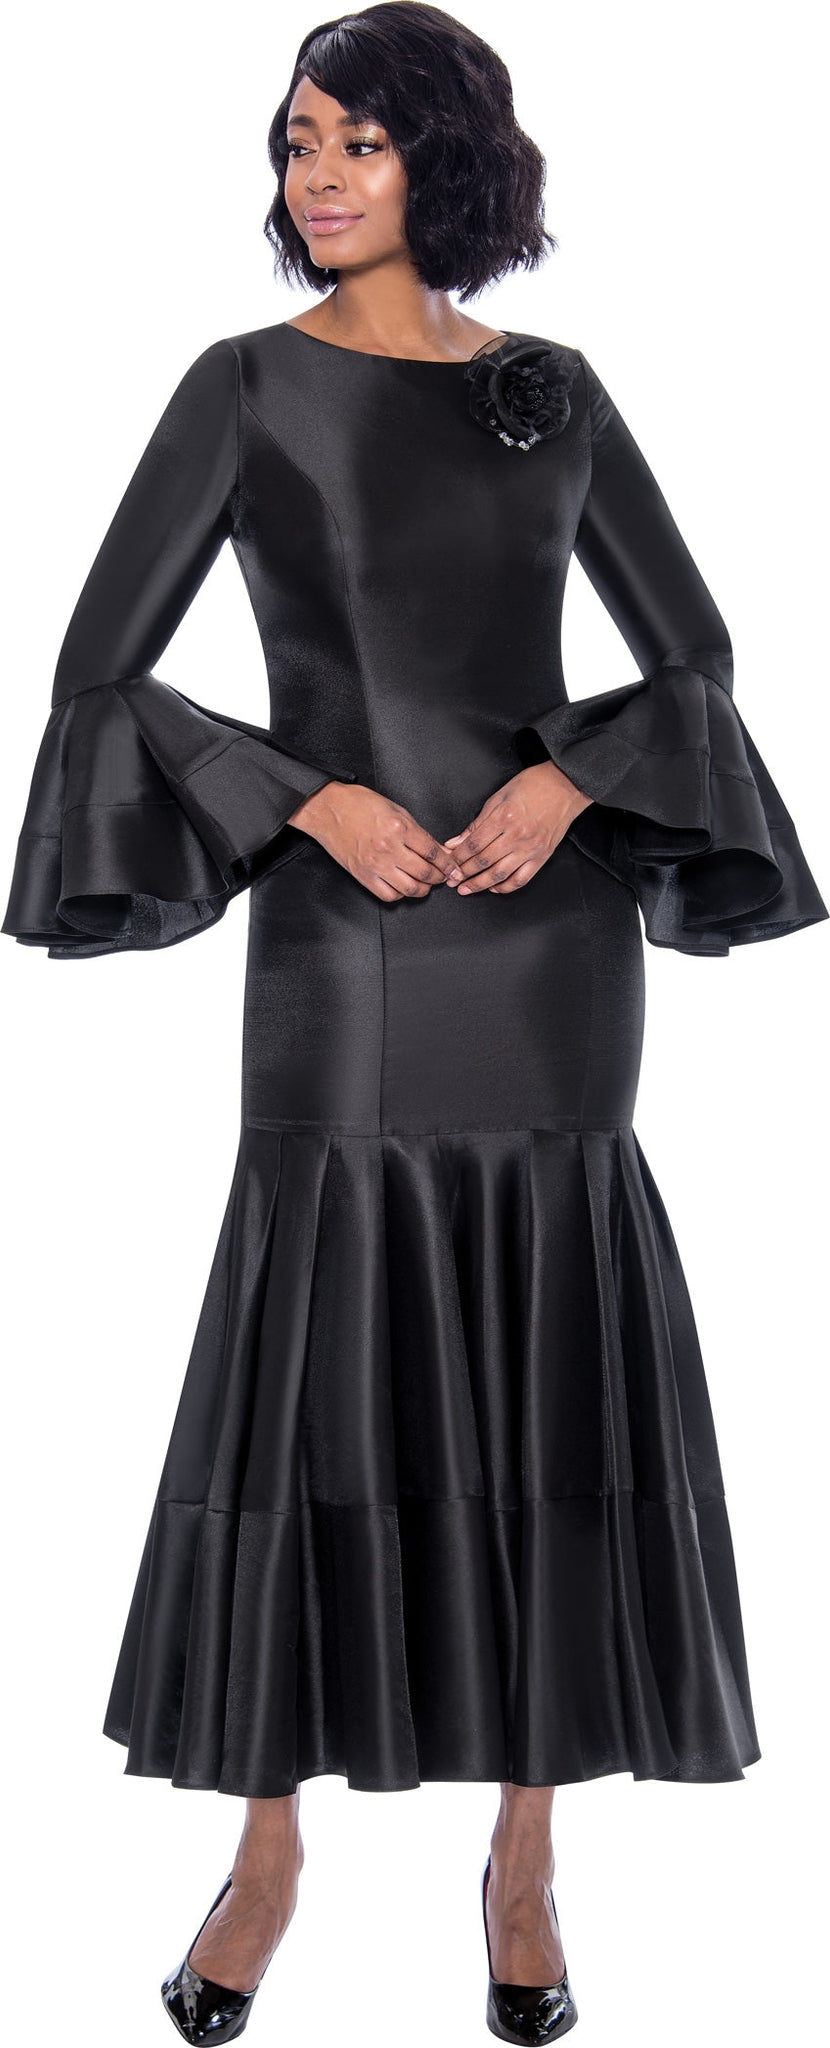 Terramina Dress 7764C-Black - Church Suits For Less